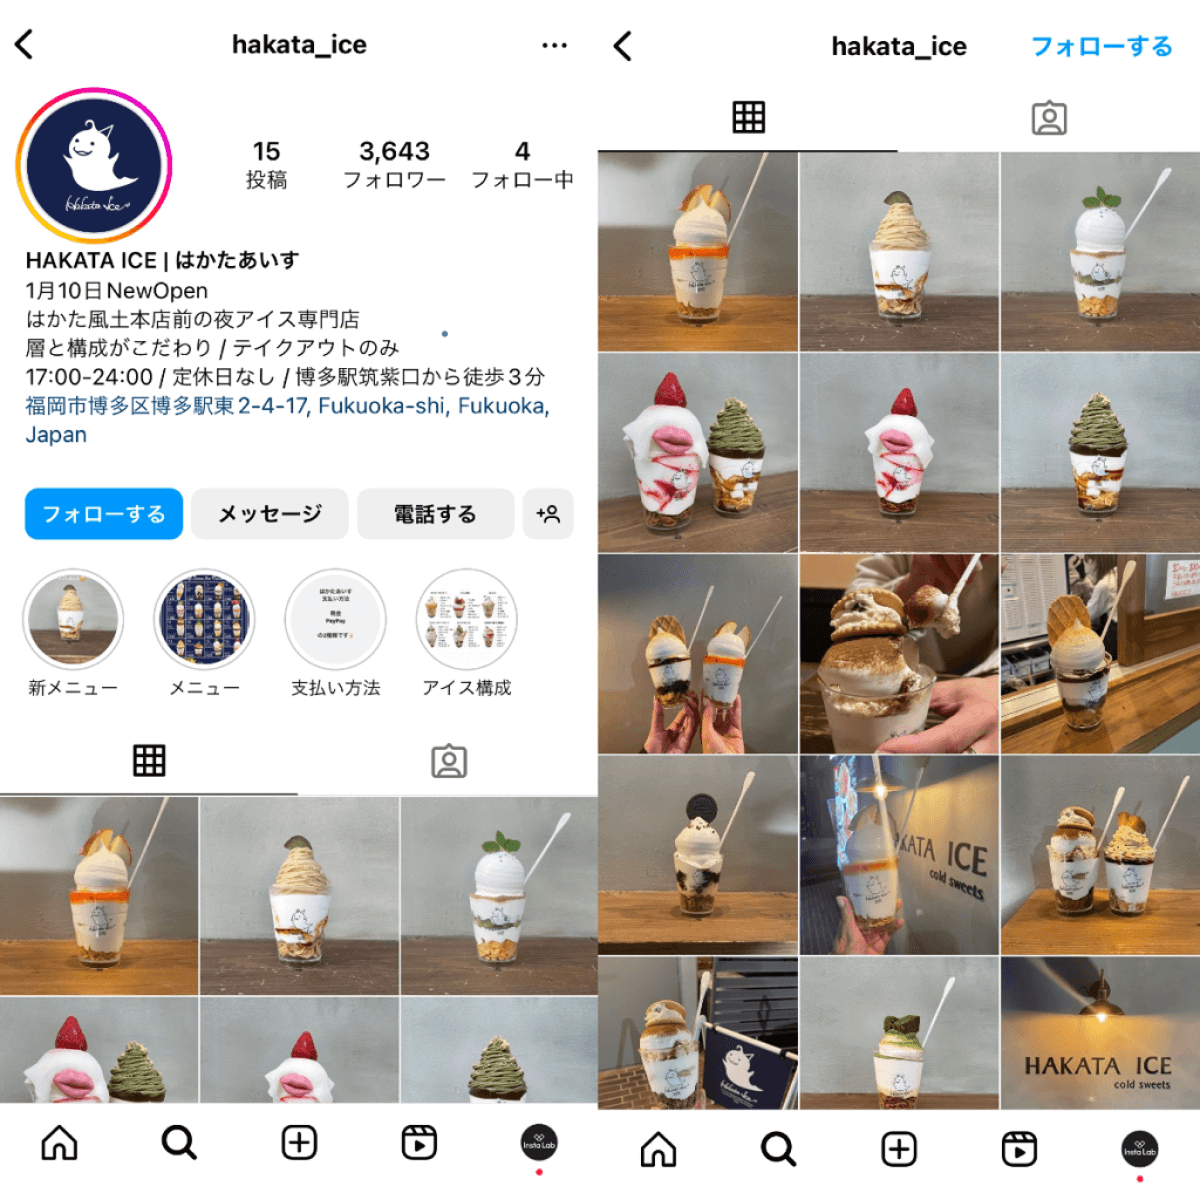 instagram-account-hakata-ice